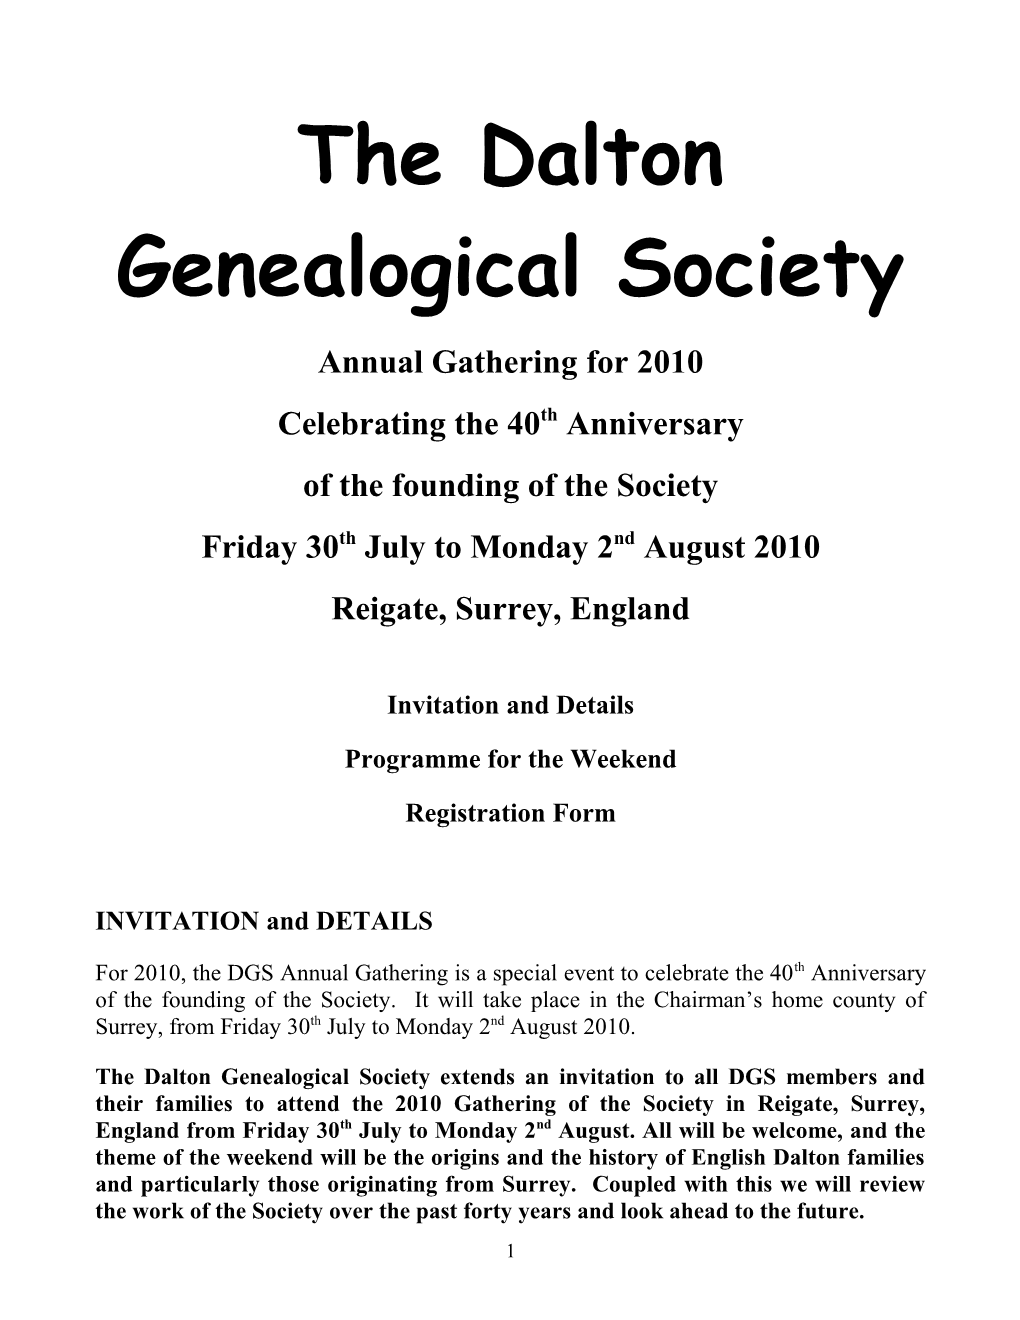 The Dalton Genealogical Society